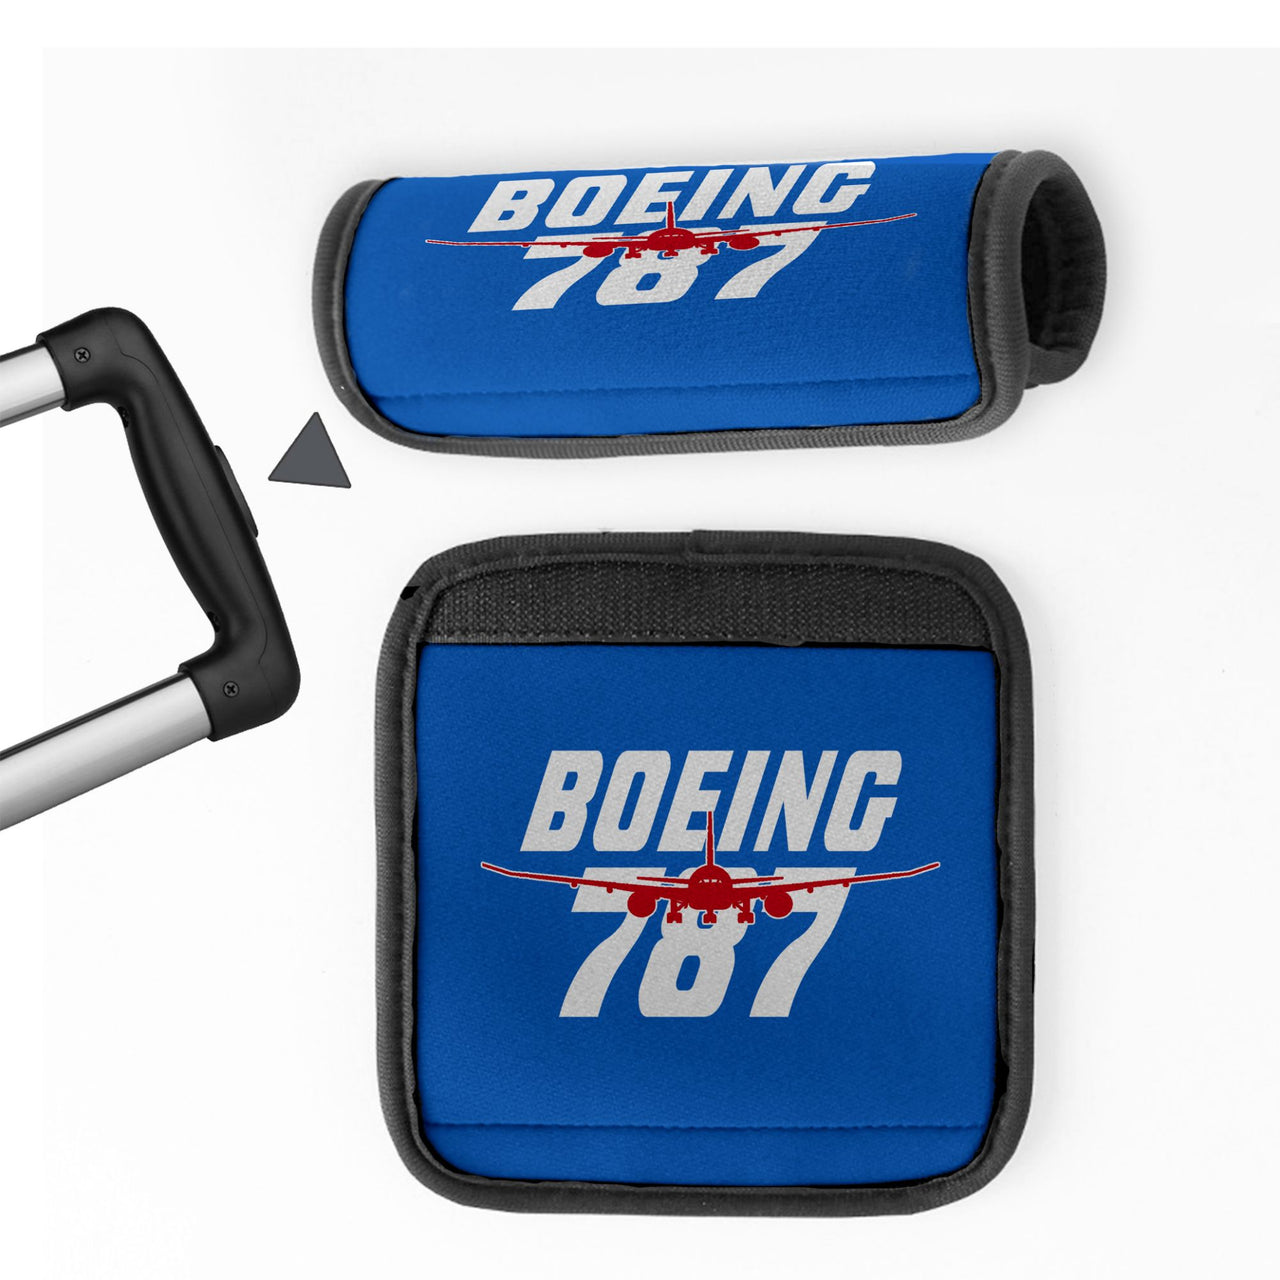 Amazing Boeing 787 Designed Neoprene Luggage Handle Covers